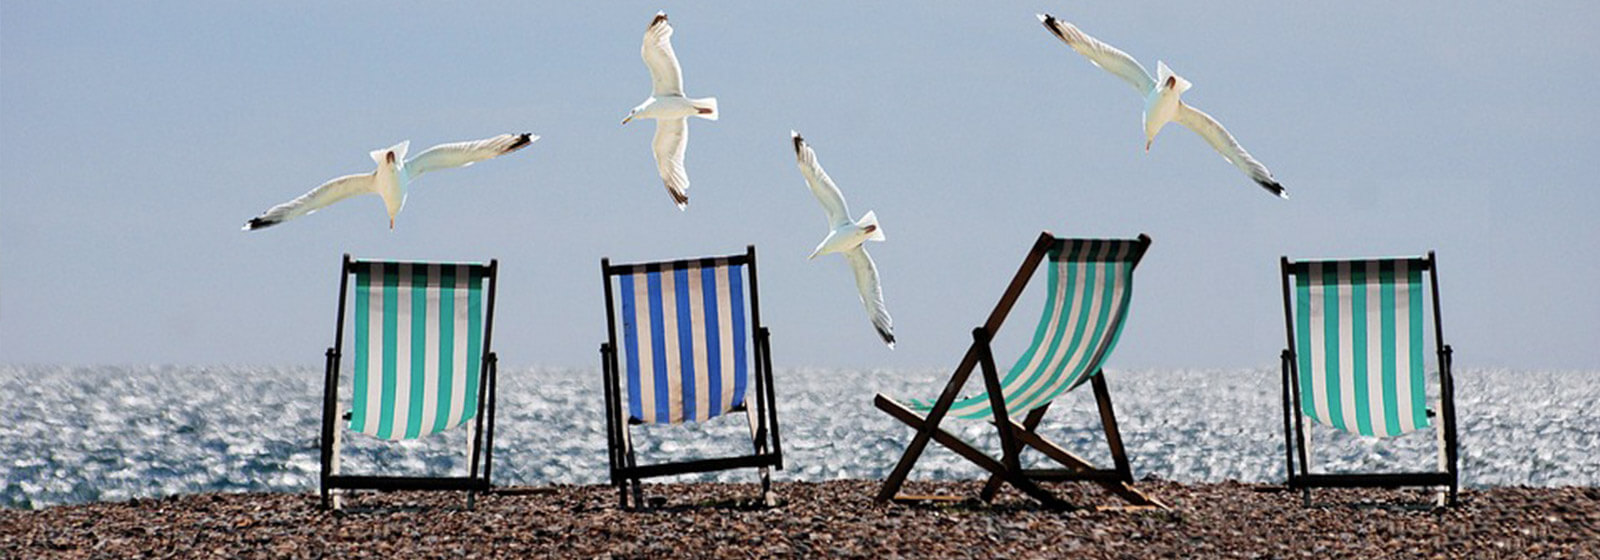 beach chairs image slide